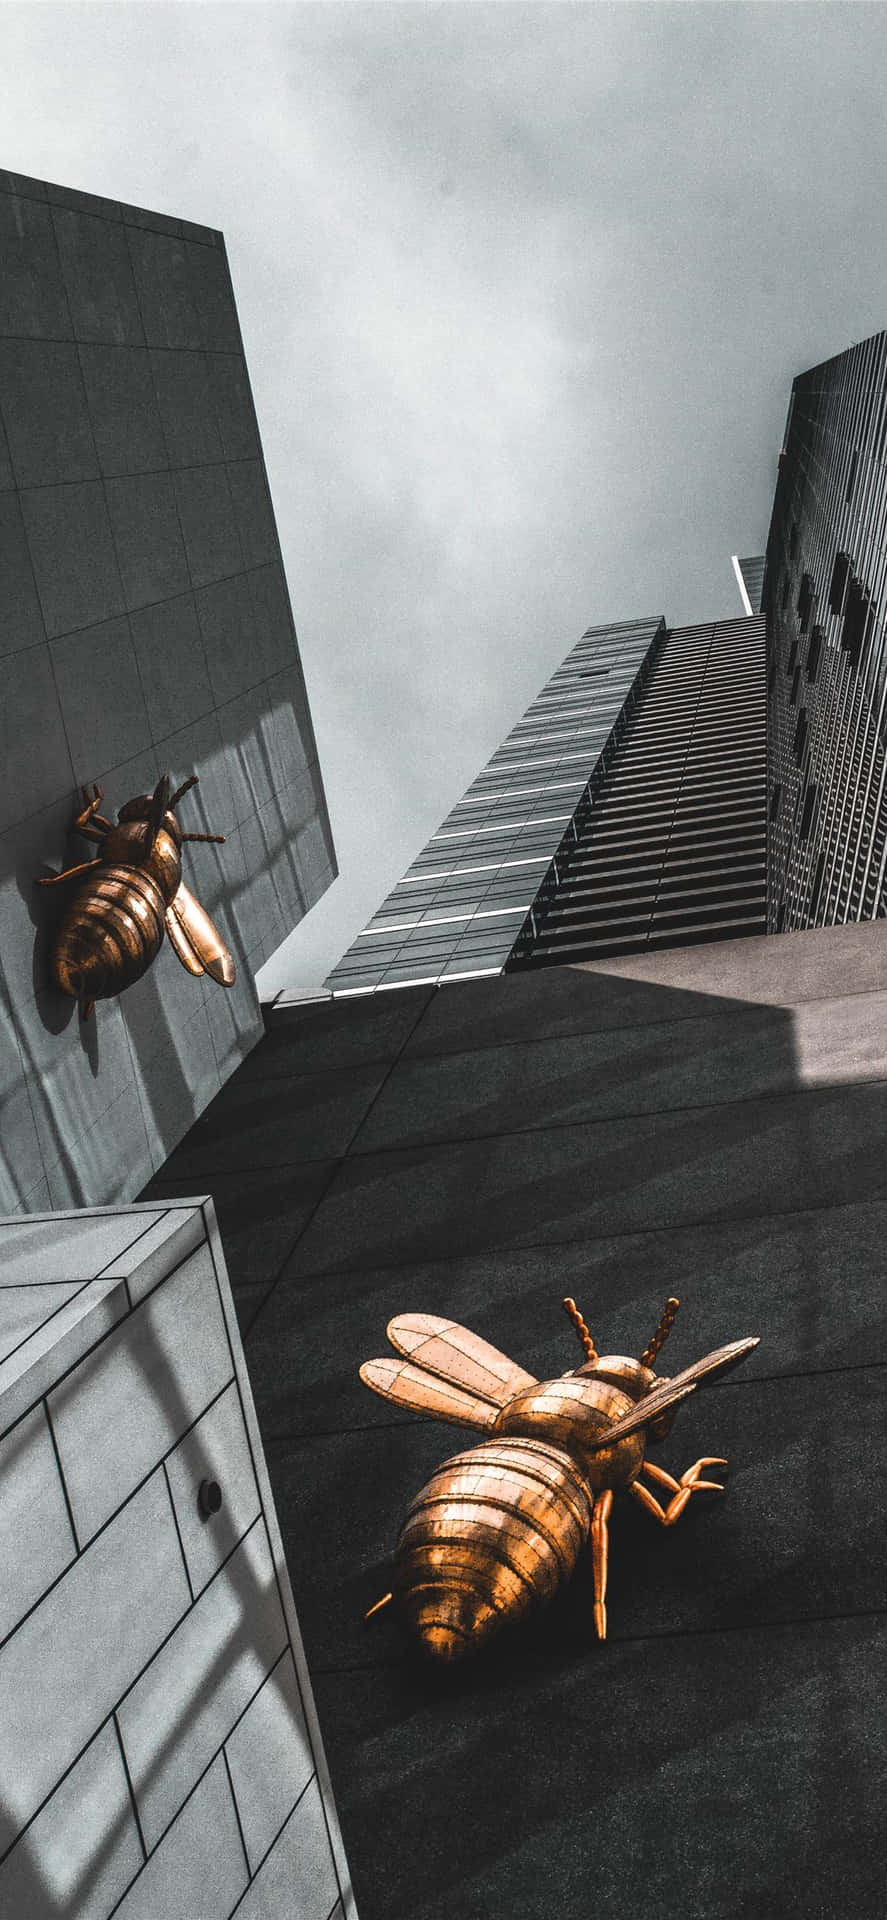 Bees On Buildings Iphone Wallpaper